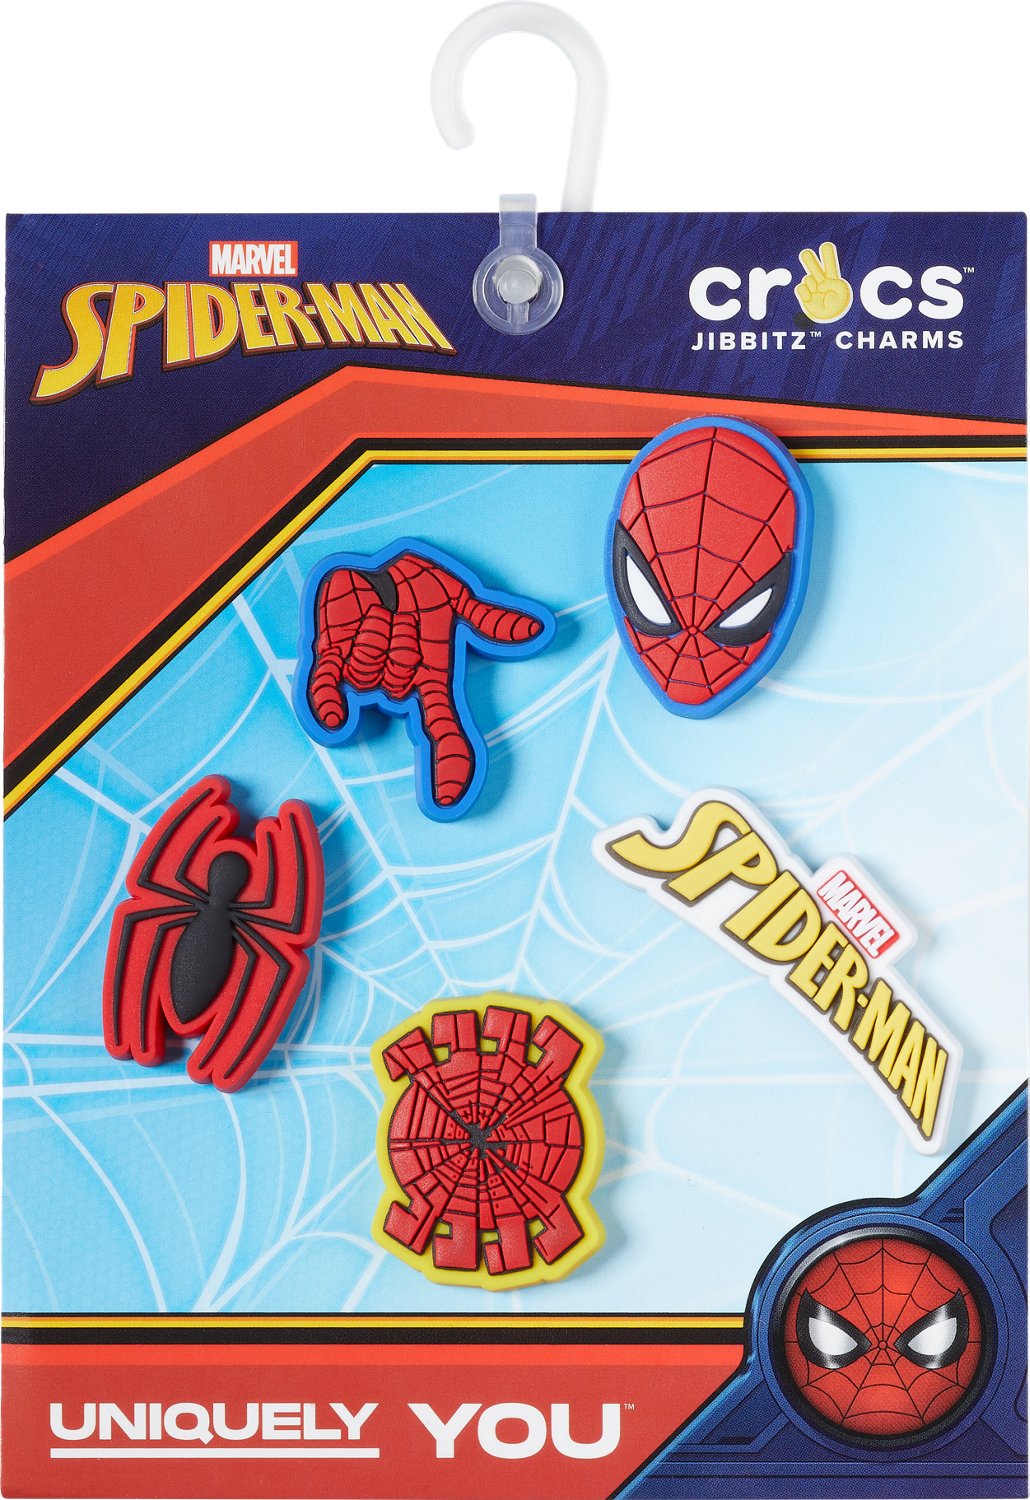 Spider Man croc Charms -   Spiderman gifts, Spiderman theme